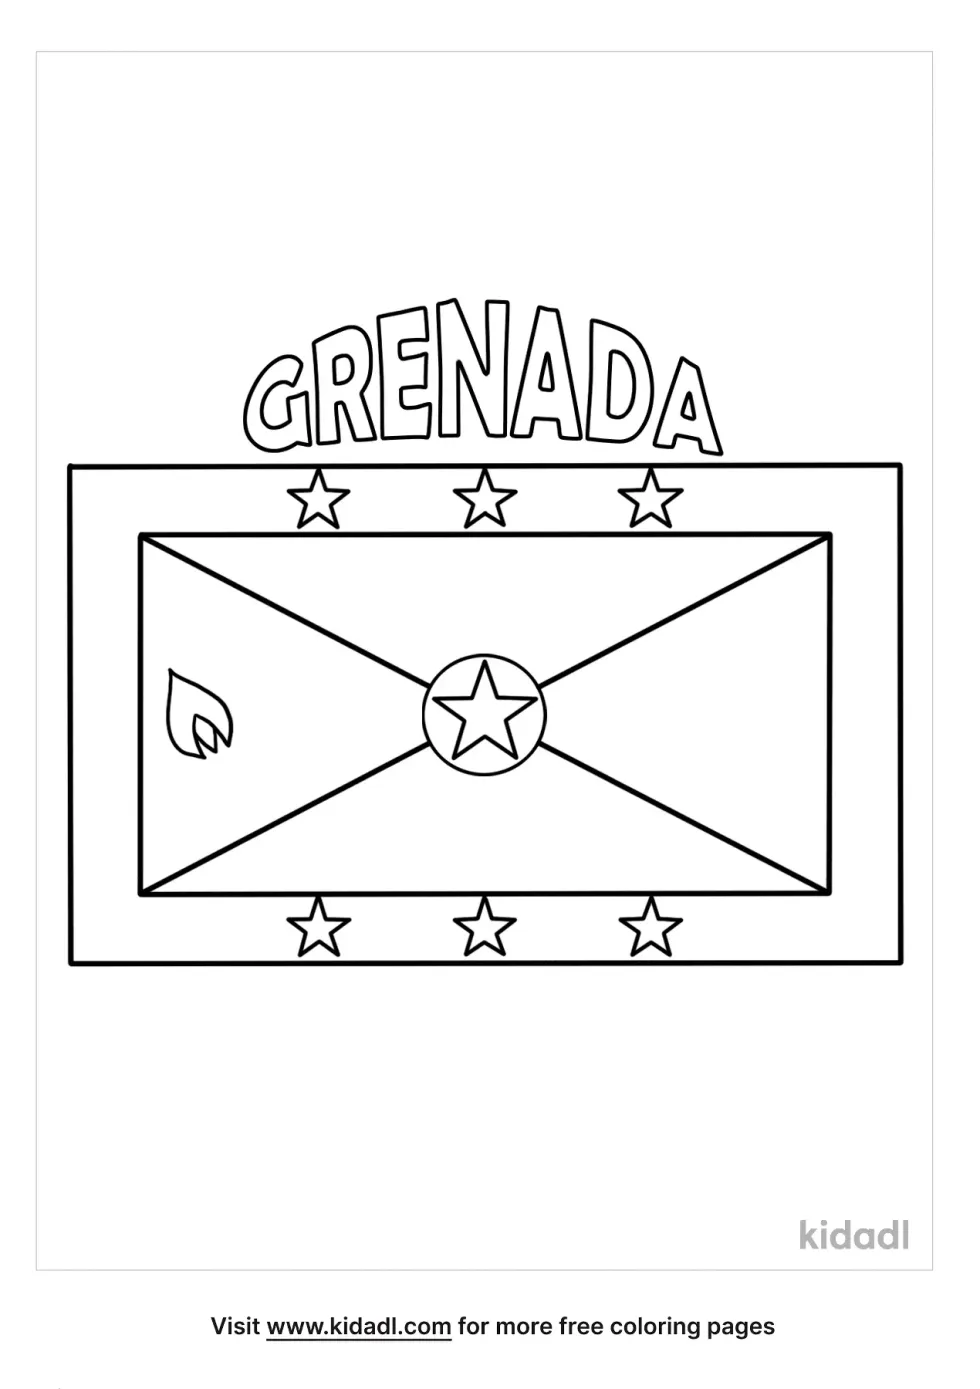 Grenada Flag | Kidadl